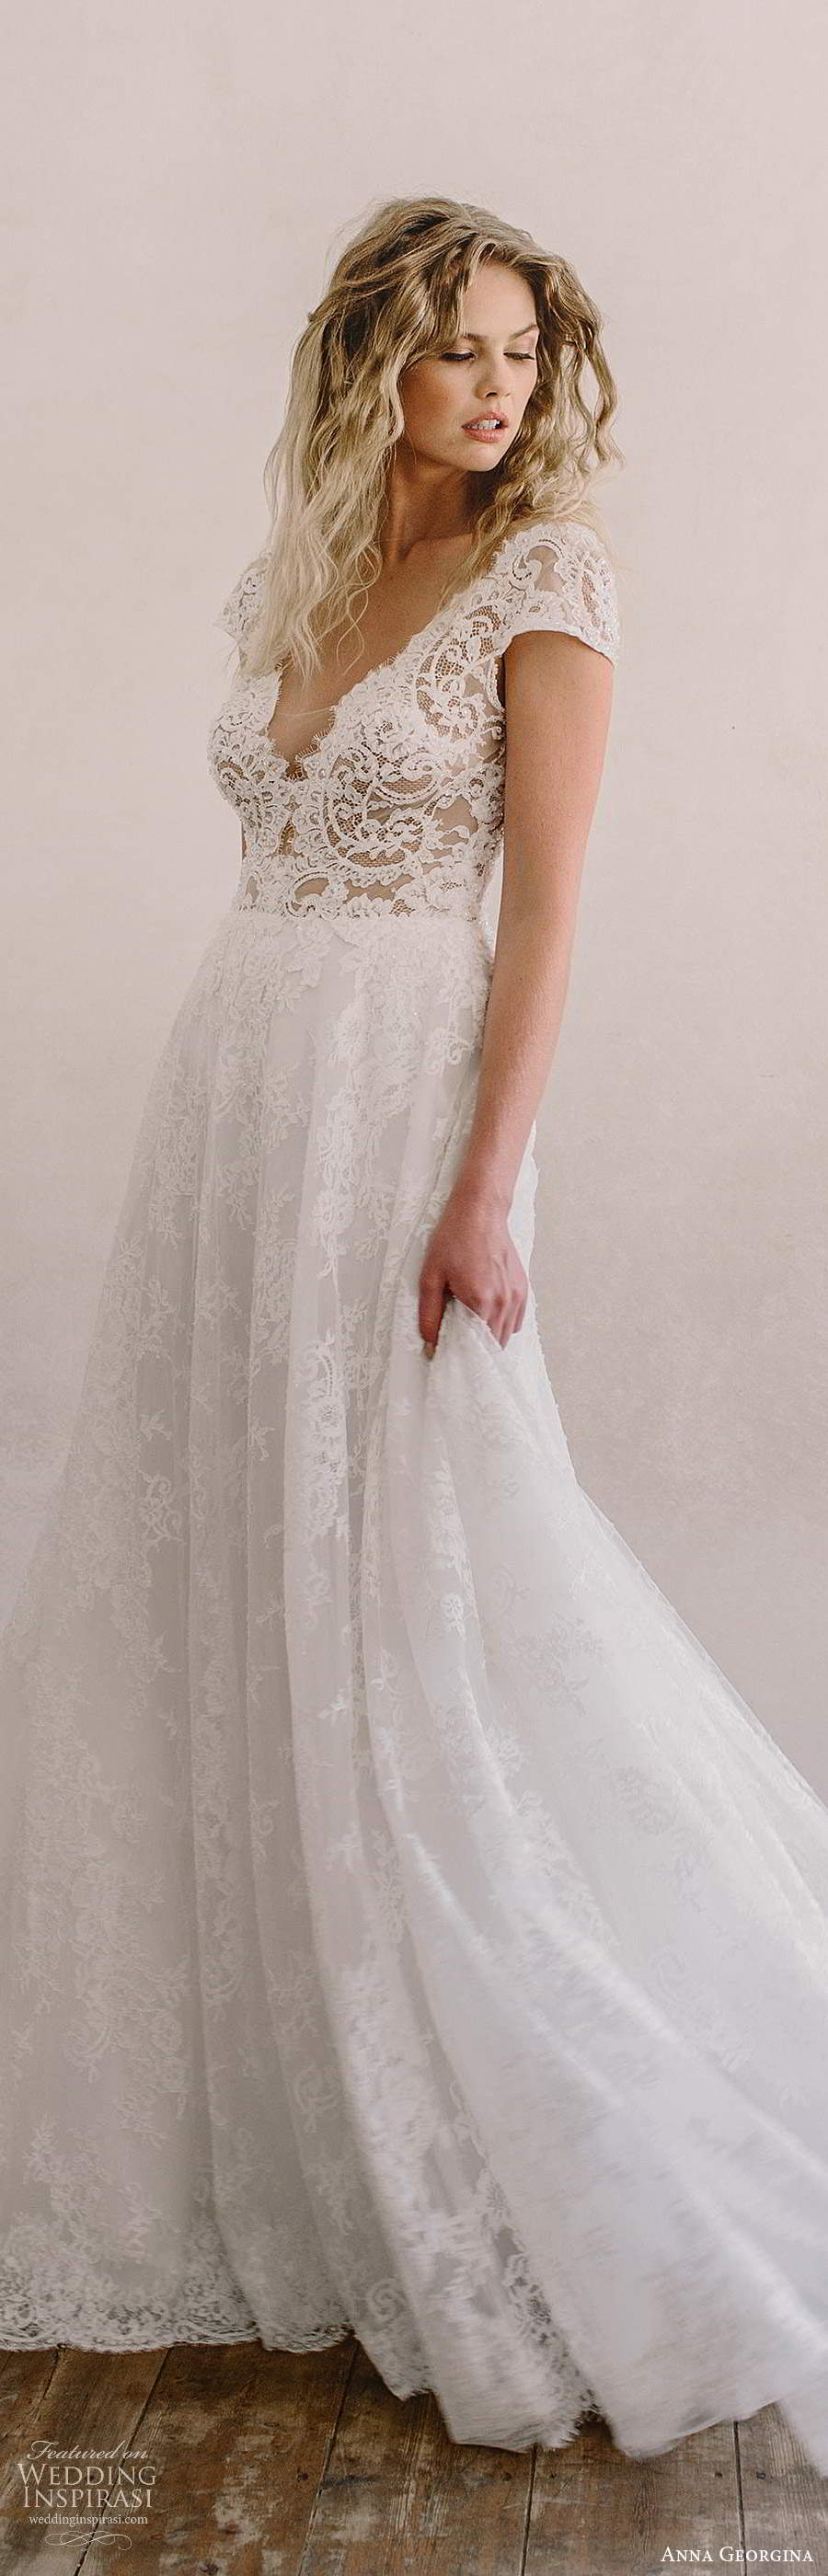 anna georgina 2021 bridal cap sleeves v neckline fully embellished lace a line ball gown wedding dress chapel train (1) lv